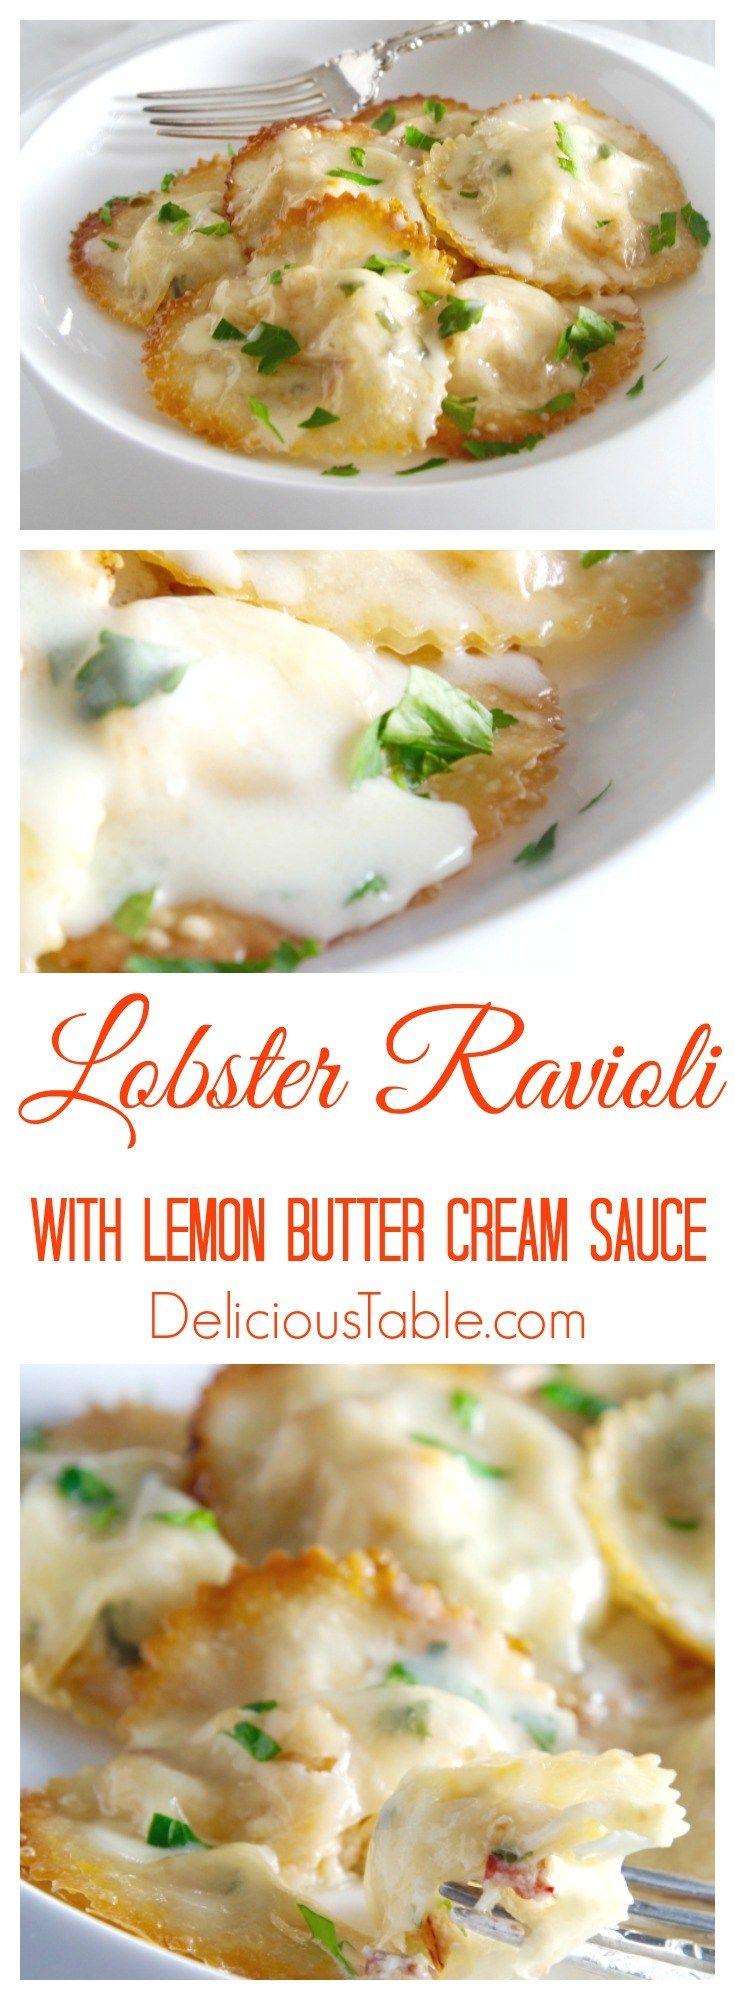 Wedding - Baked Lobster Ravioli - Lemon Butter Cream Sauce